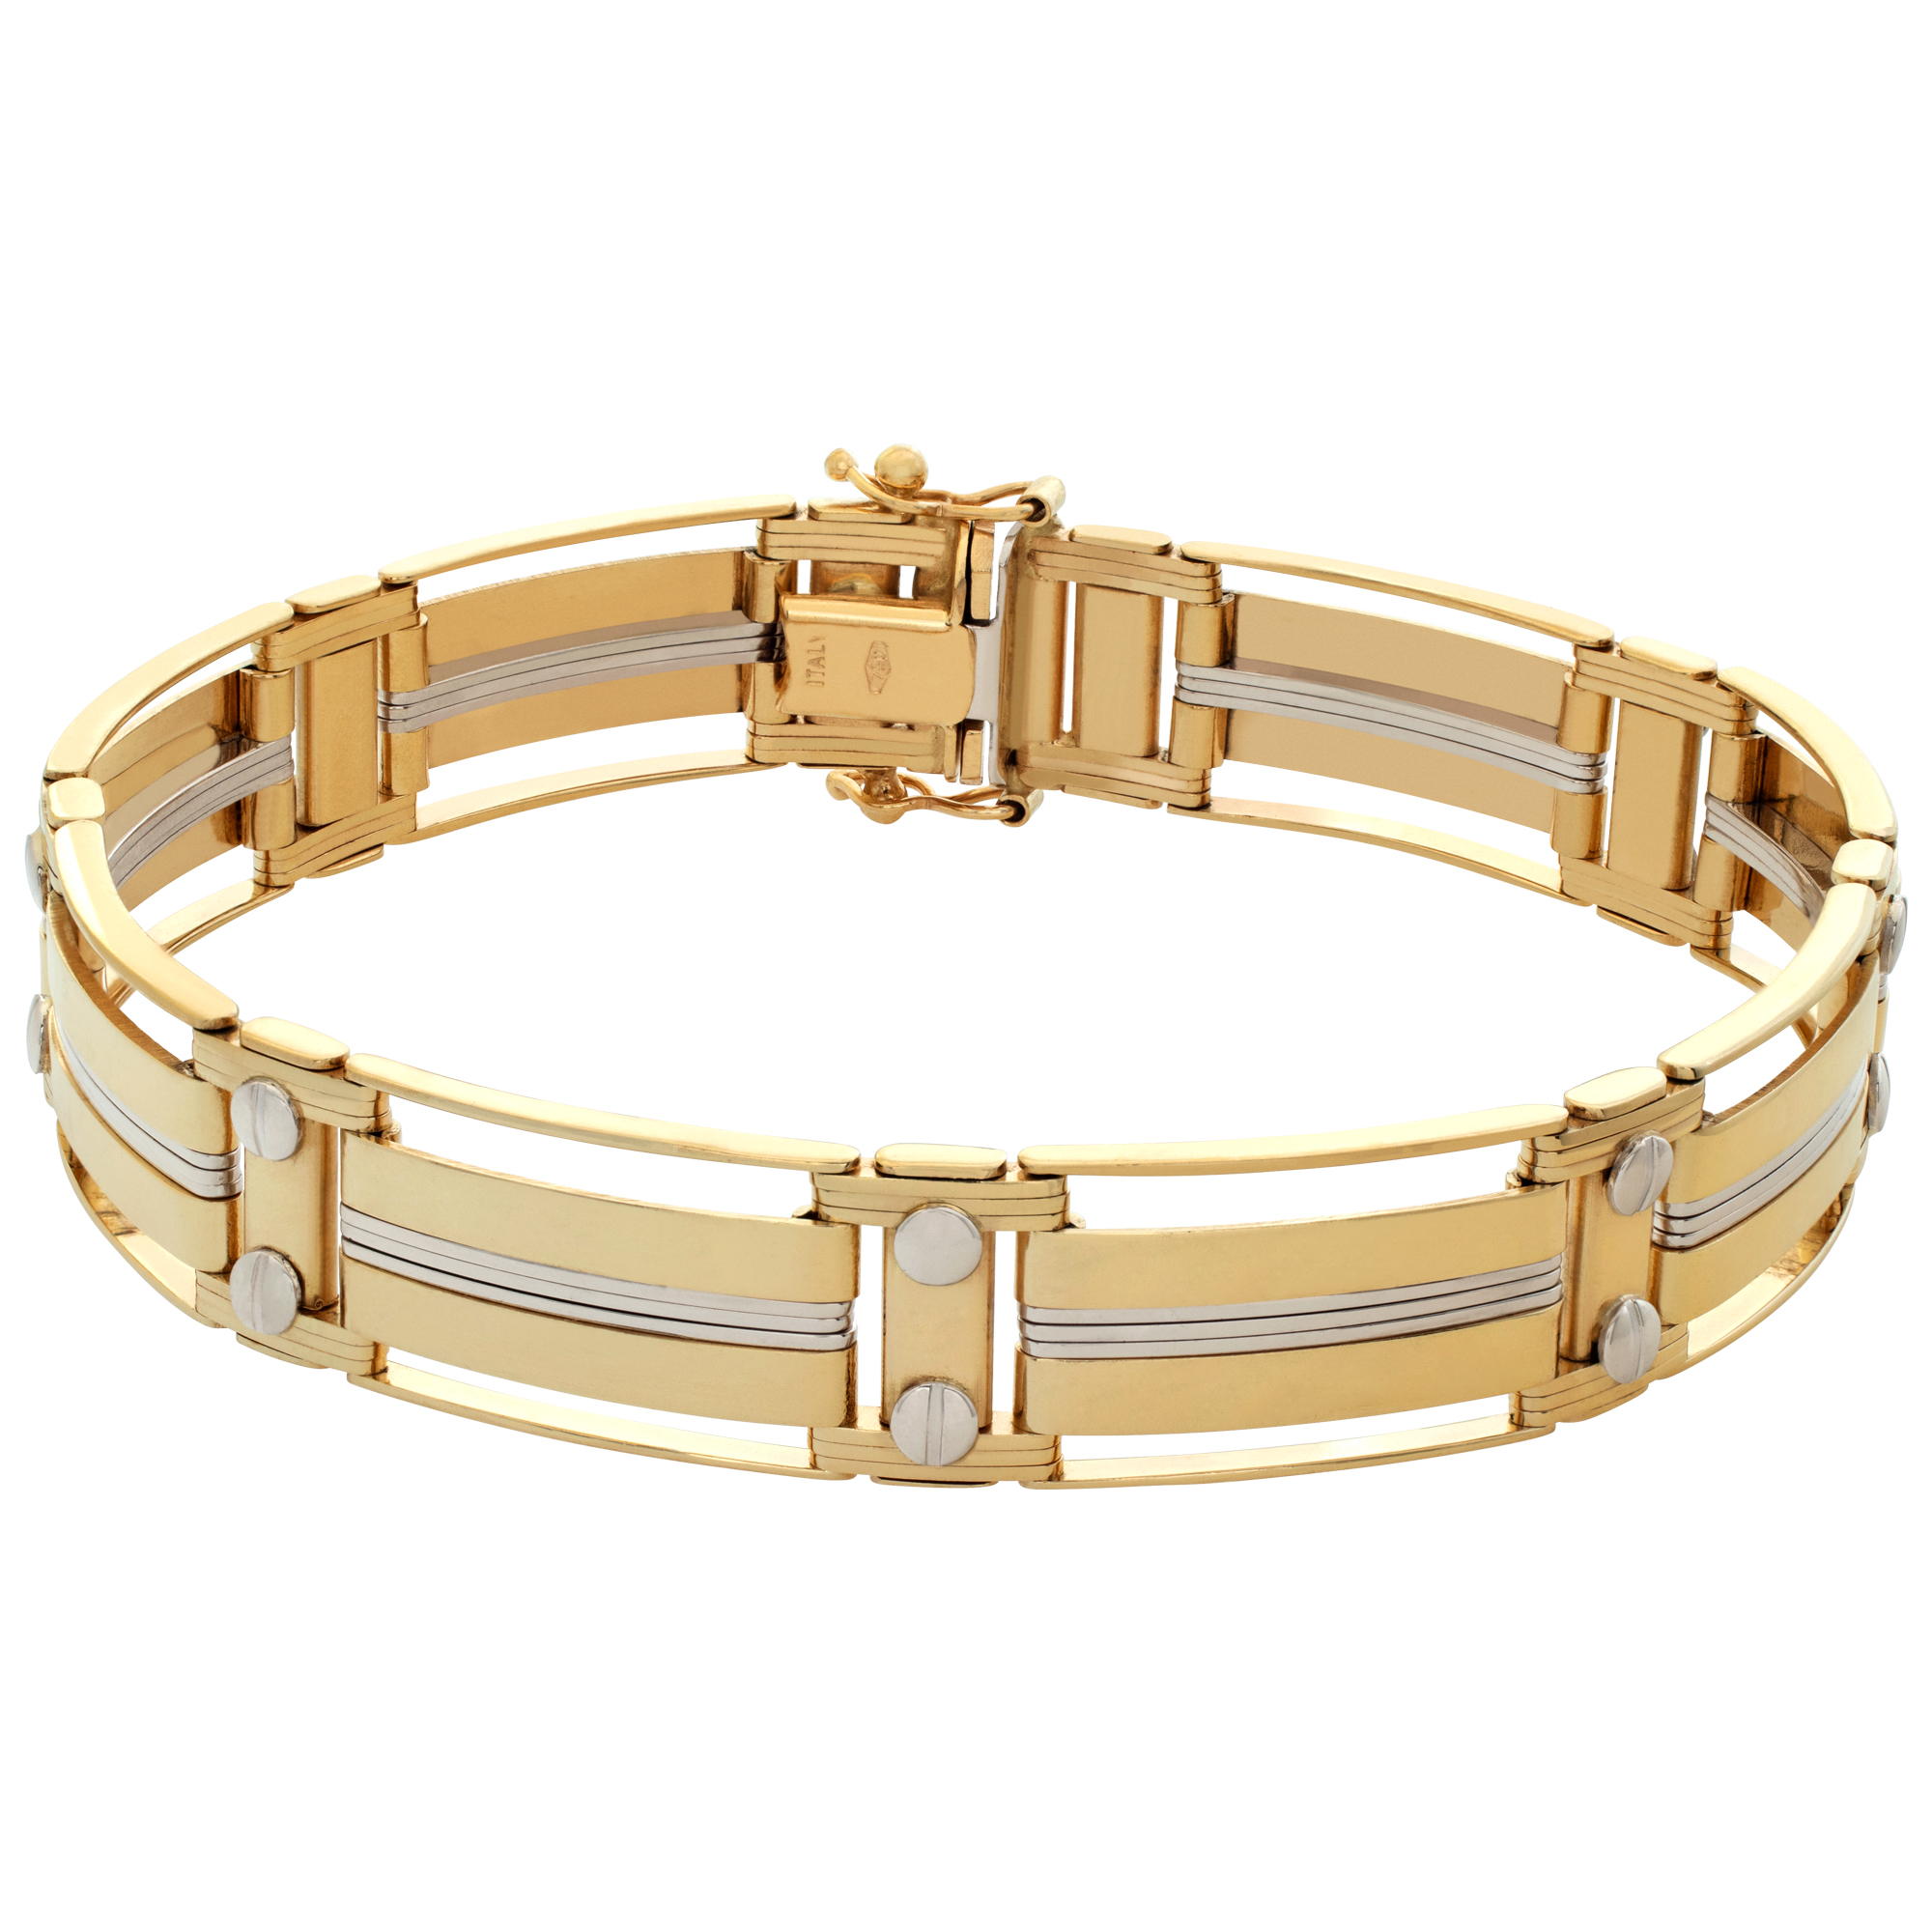 Mens 18k gold bracelet with unique design and screws image 1